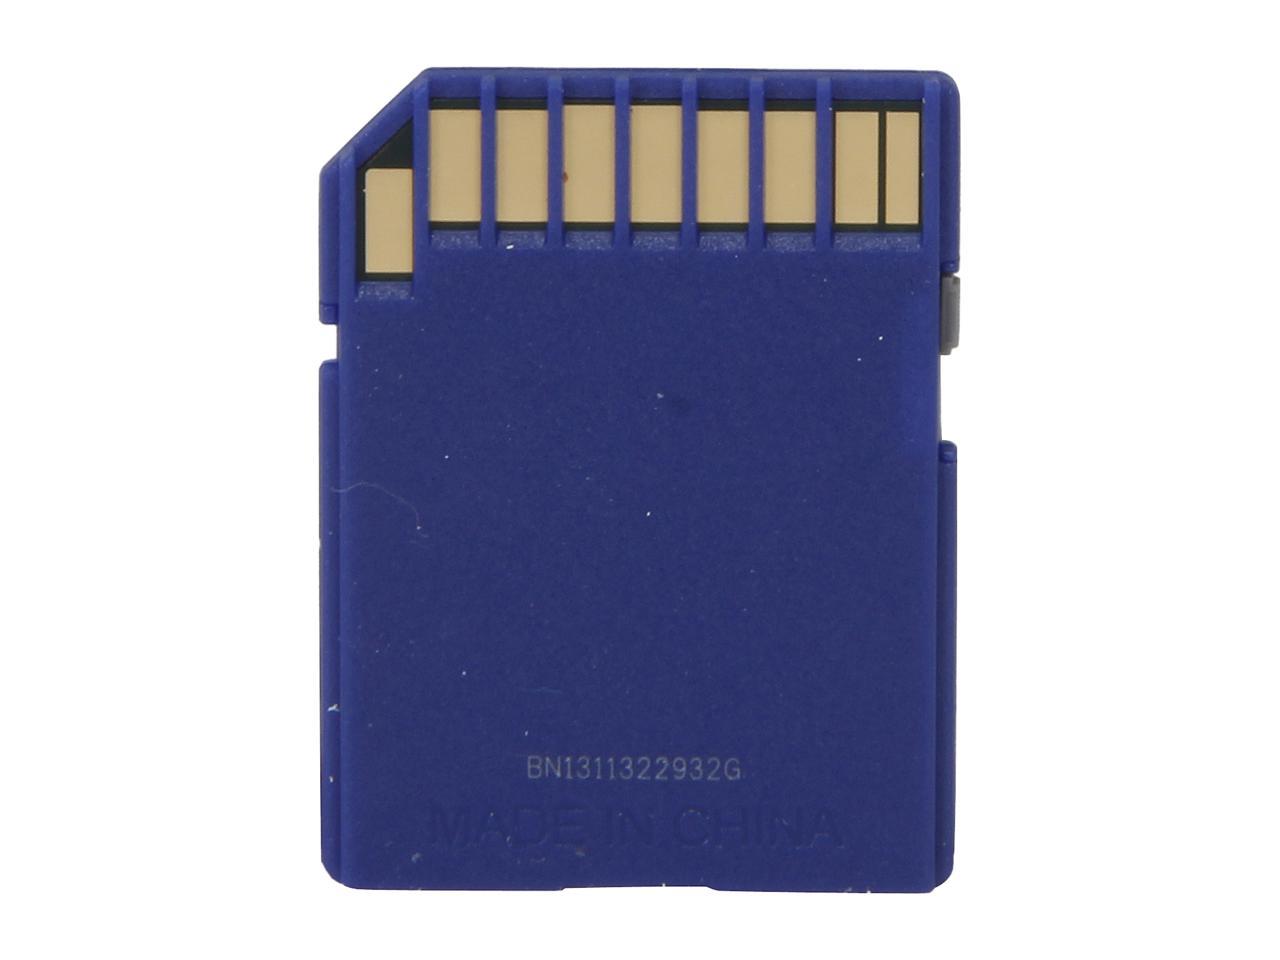 SanDisk 64 GB Secure Digital Extended Capacity (SDXC) Flash card